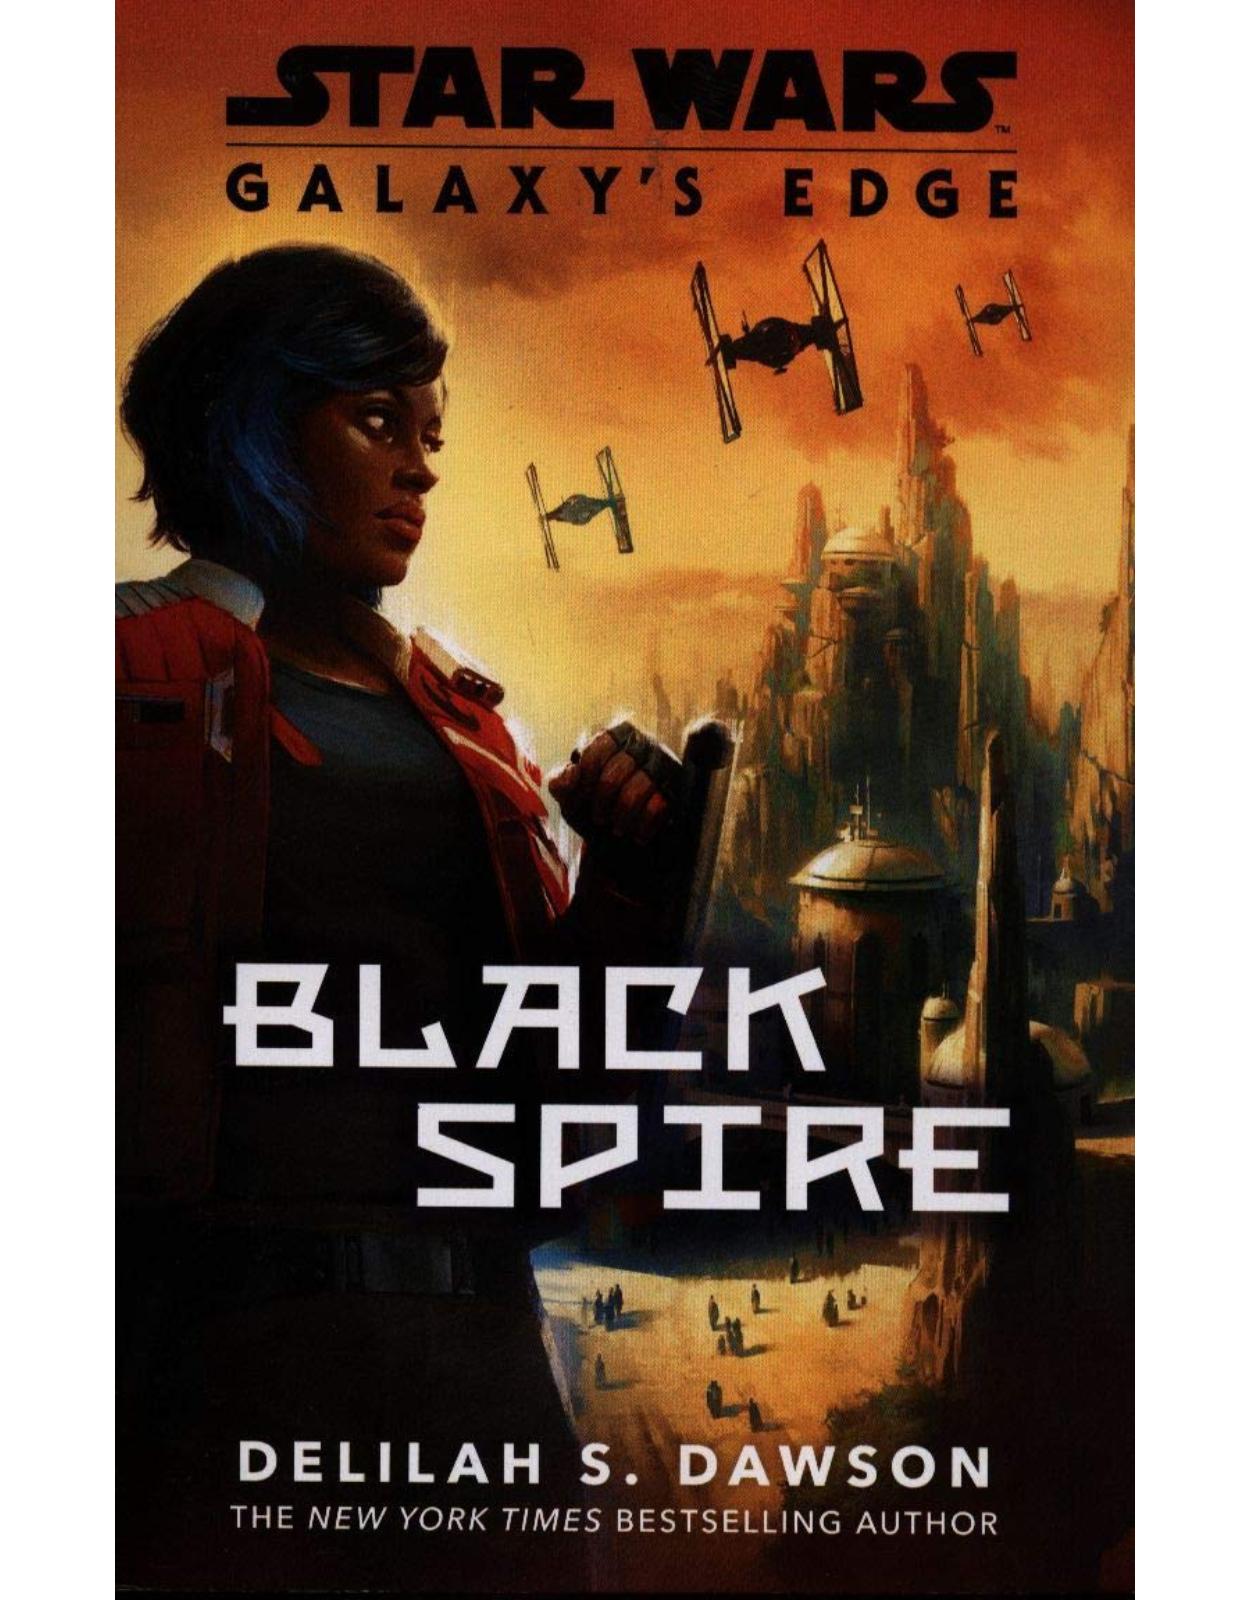 Galaxy’s Edge: Black Spire (Star Wars Galaxys Edge)